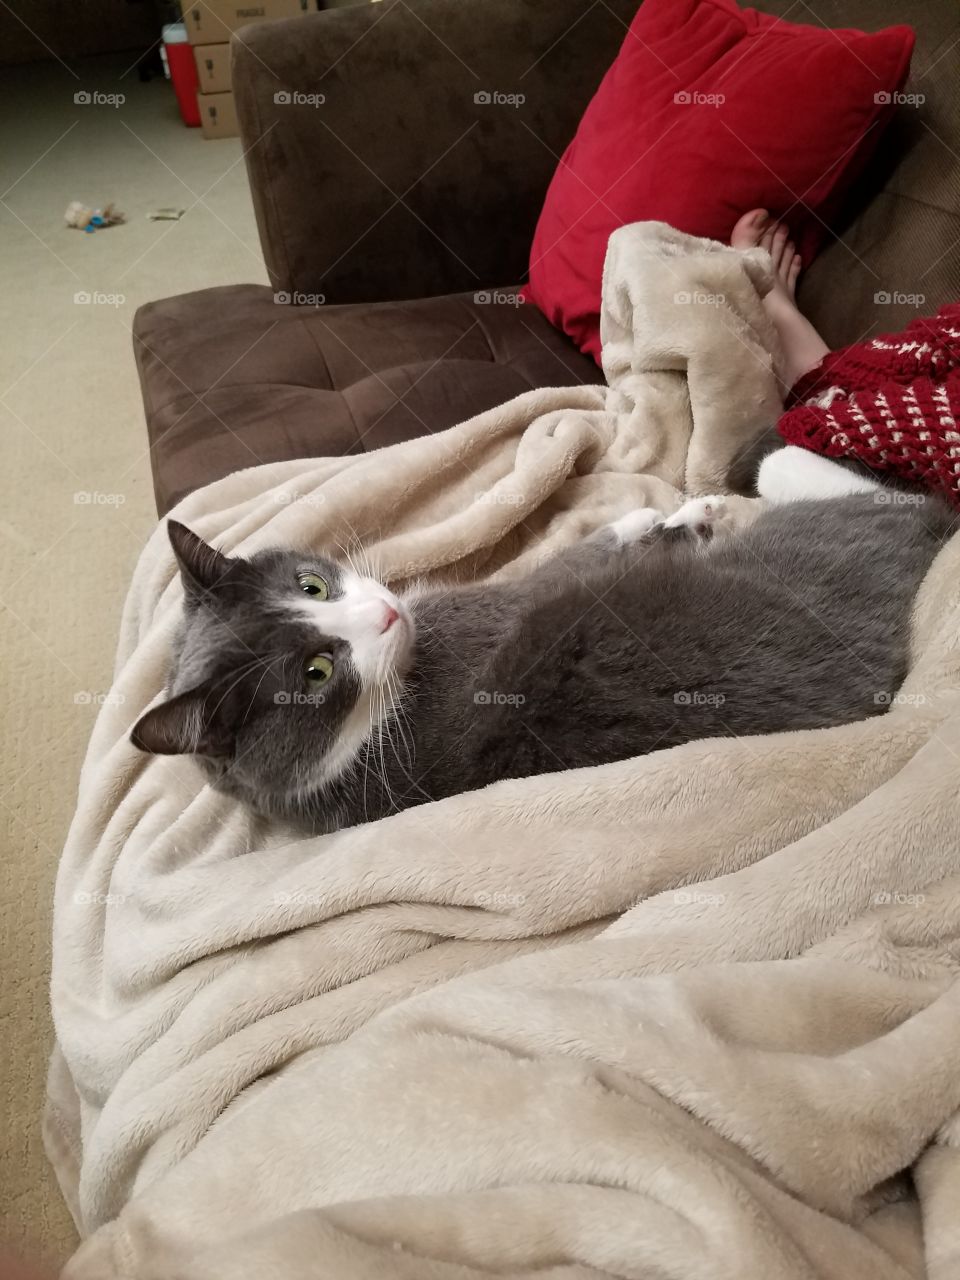 Jasper lying on a blanket